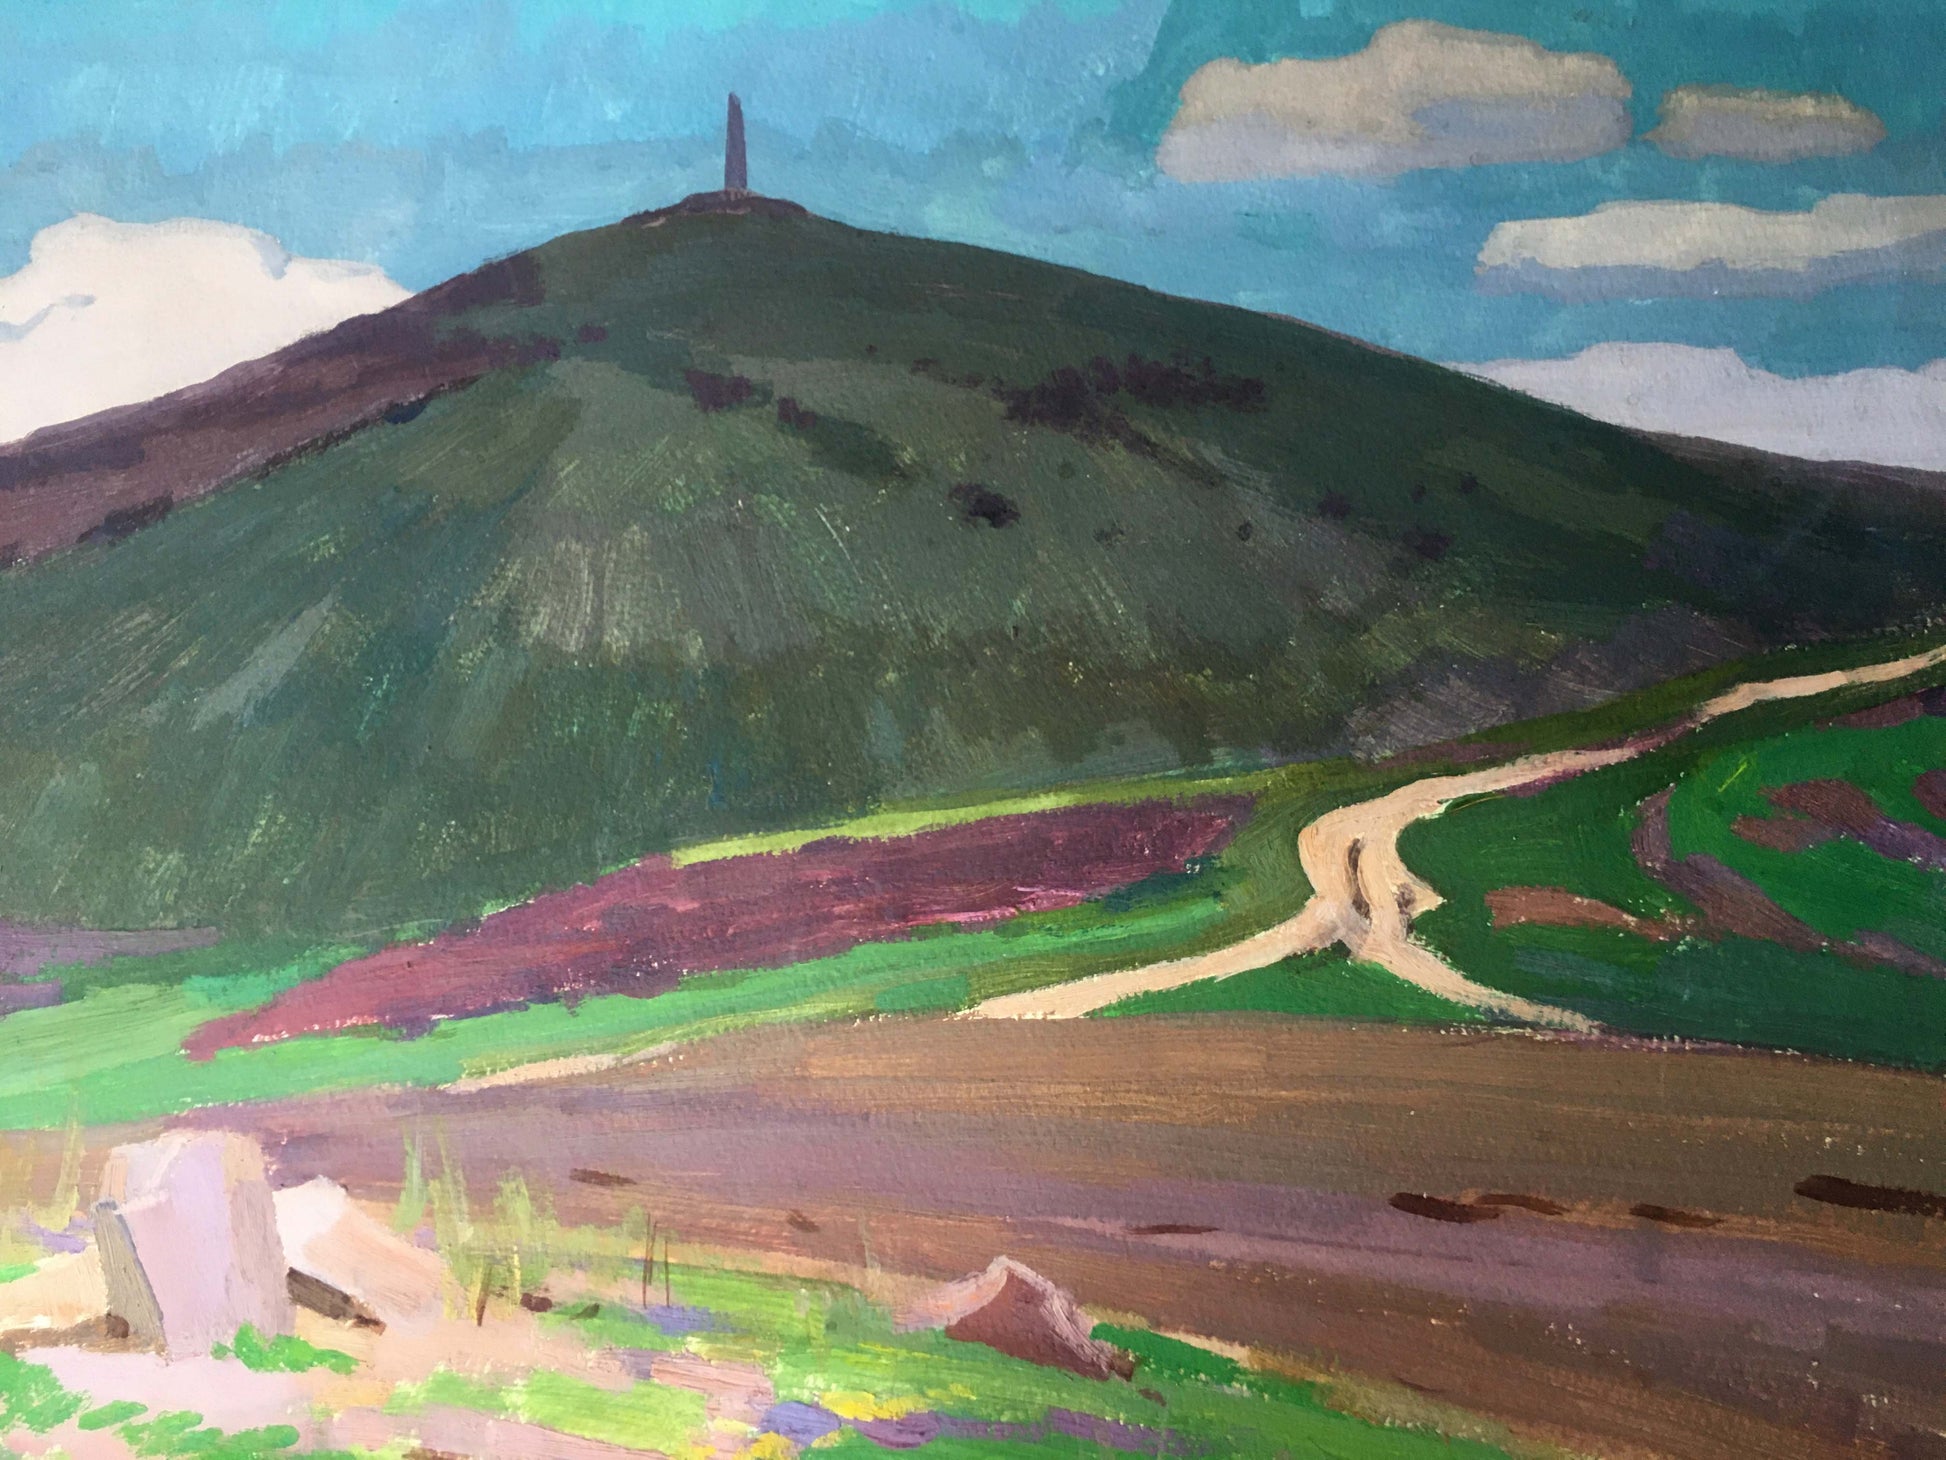 Mountain Landscape: a gouache painting by Vladimir Chernikov